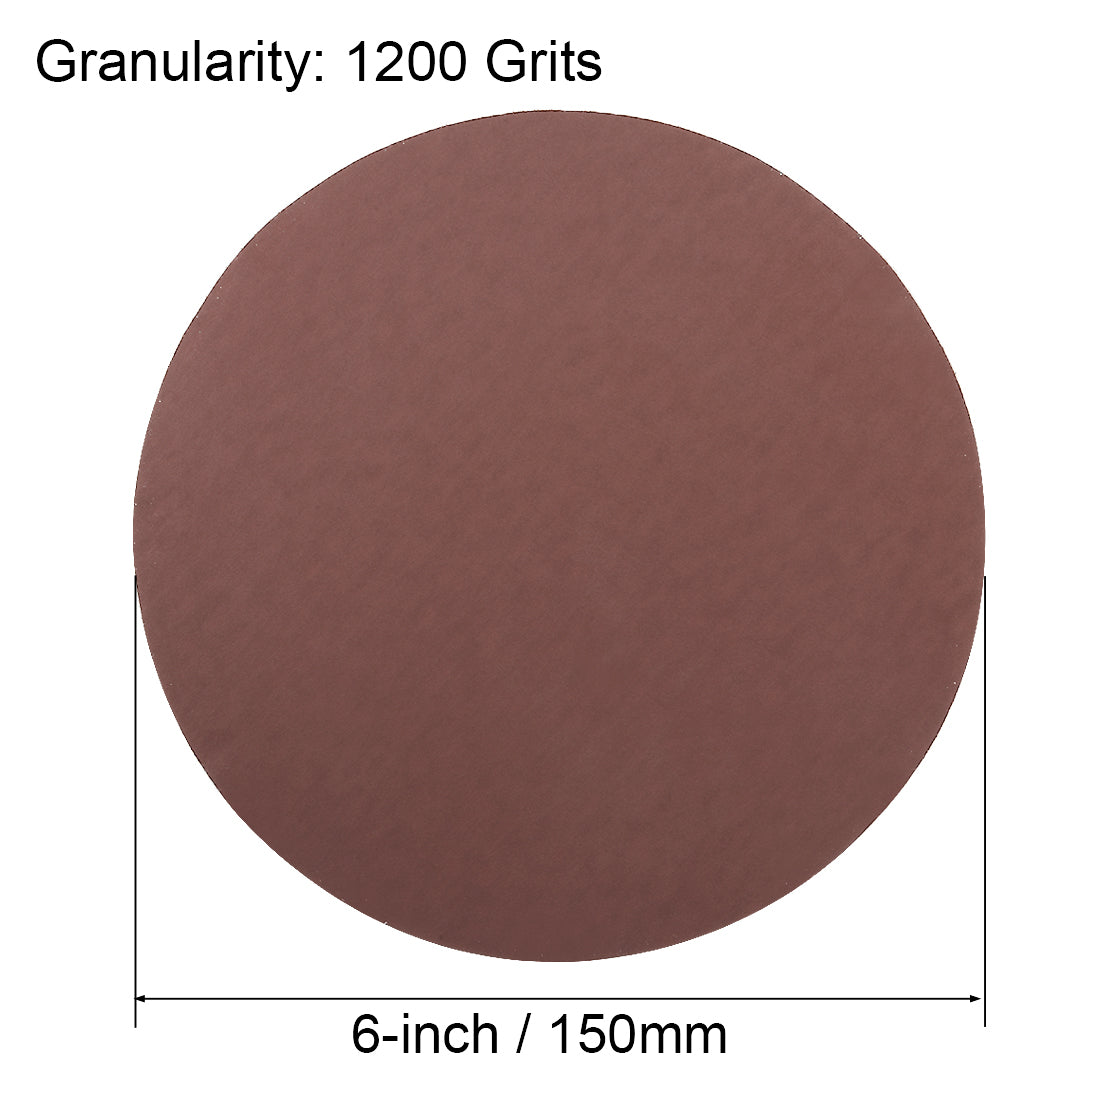 uxcell Uxcell 6-inch 1200-Grits PSA Sanding Disc, Adhesive-Backed Sanding Sheets Aluminum Oxide Sandpaper for Random Orbital Sander 10pcs